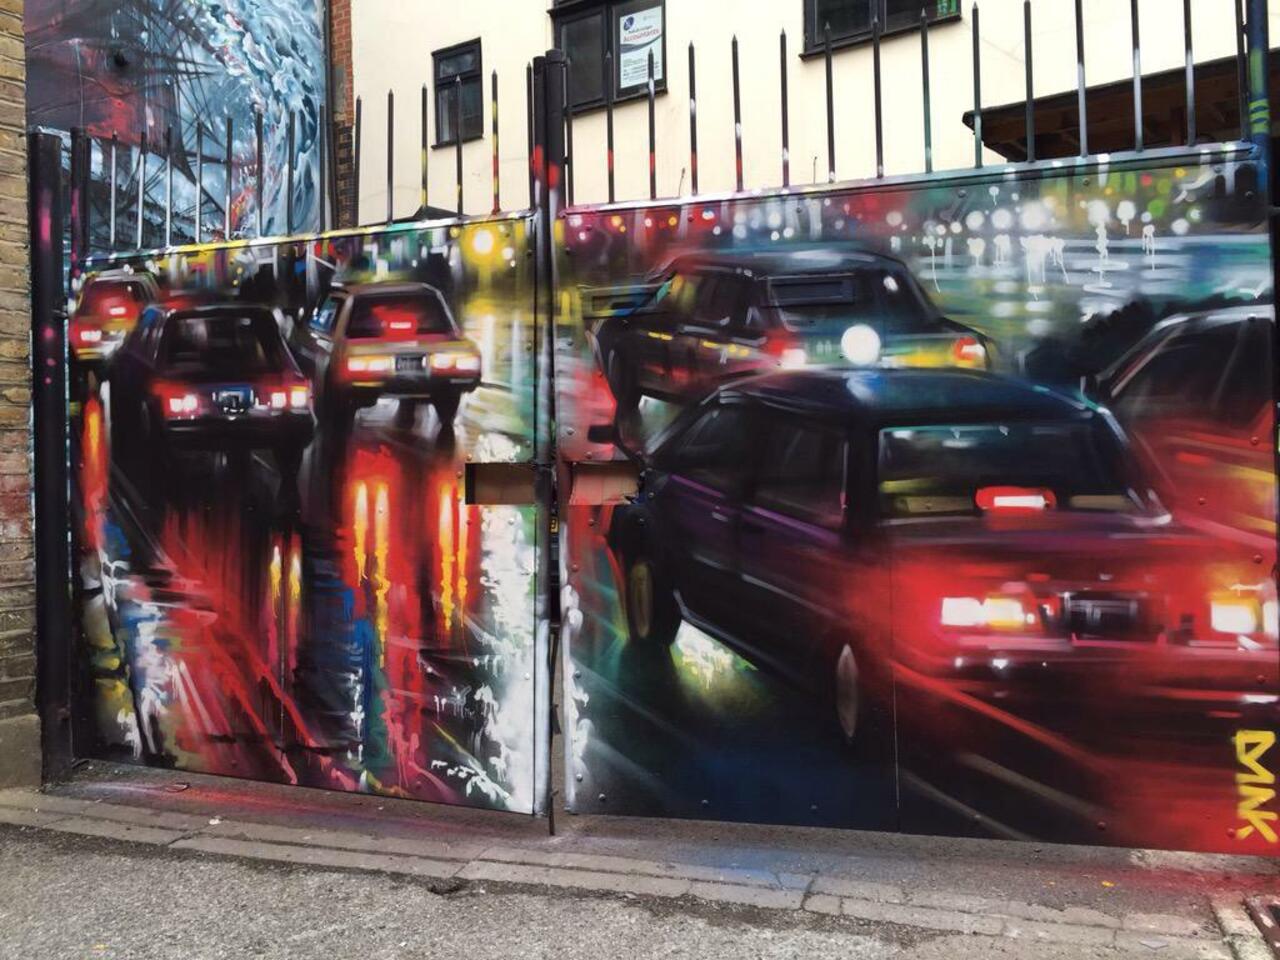 New Street Art by DanKitchener in Brick Lane London 

#art #graffiti #mural #streetart http://t.co/jJI9vzBdyK